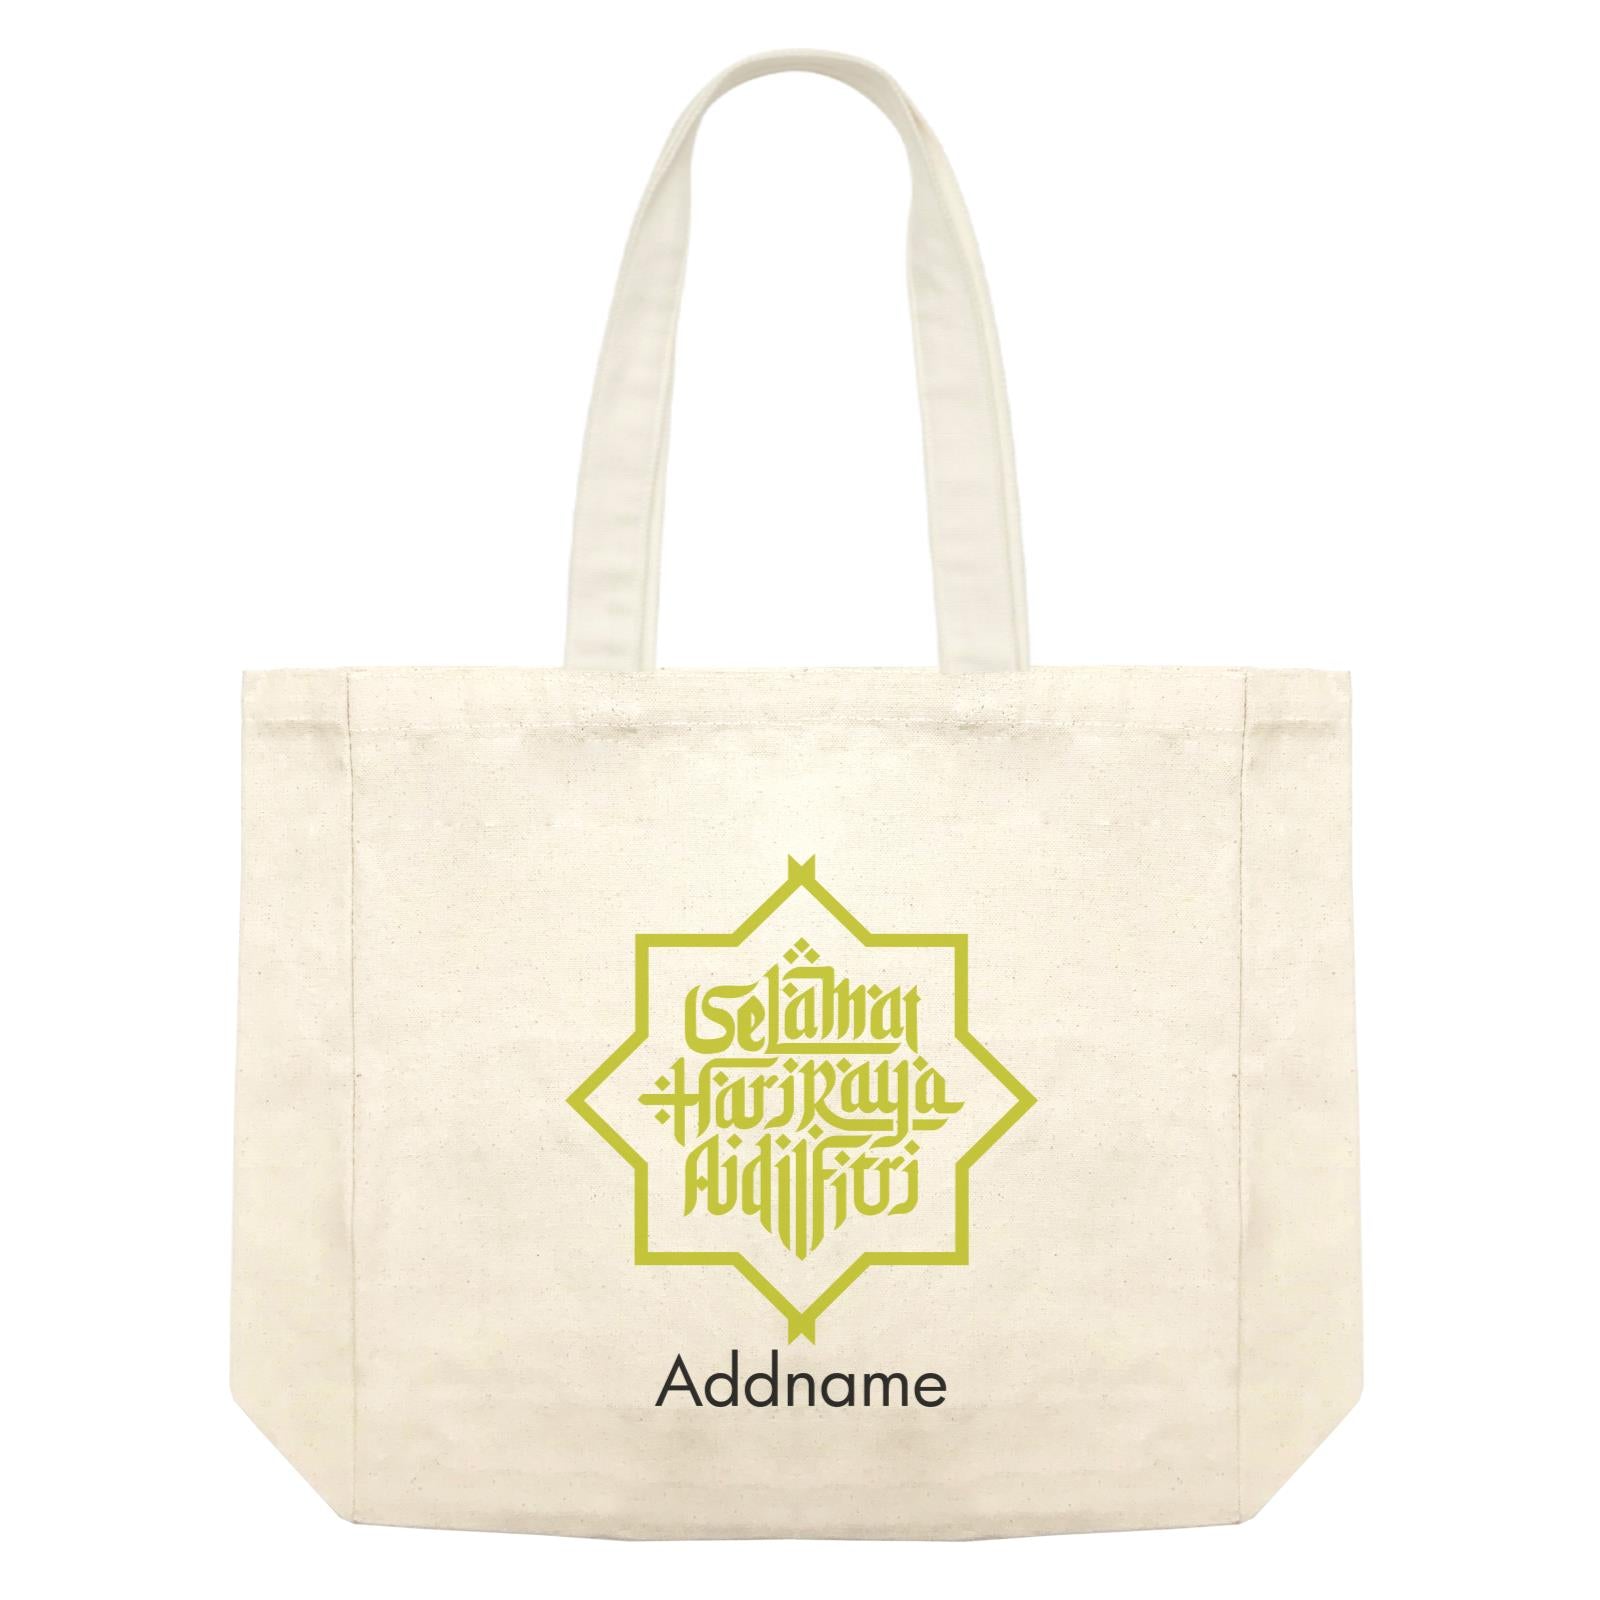 Selamat Hari Raya Aidilfitri Jawi Typography Shopping Bag